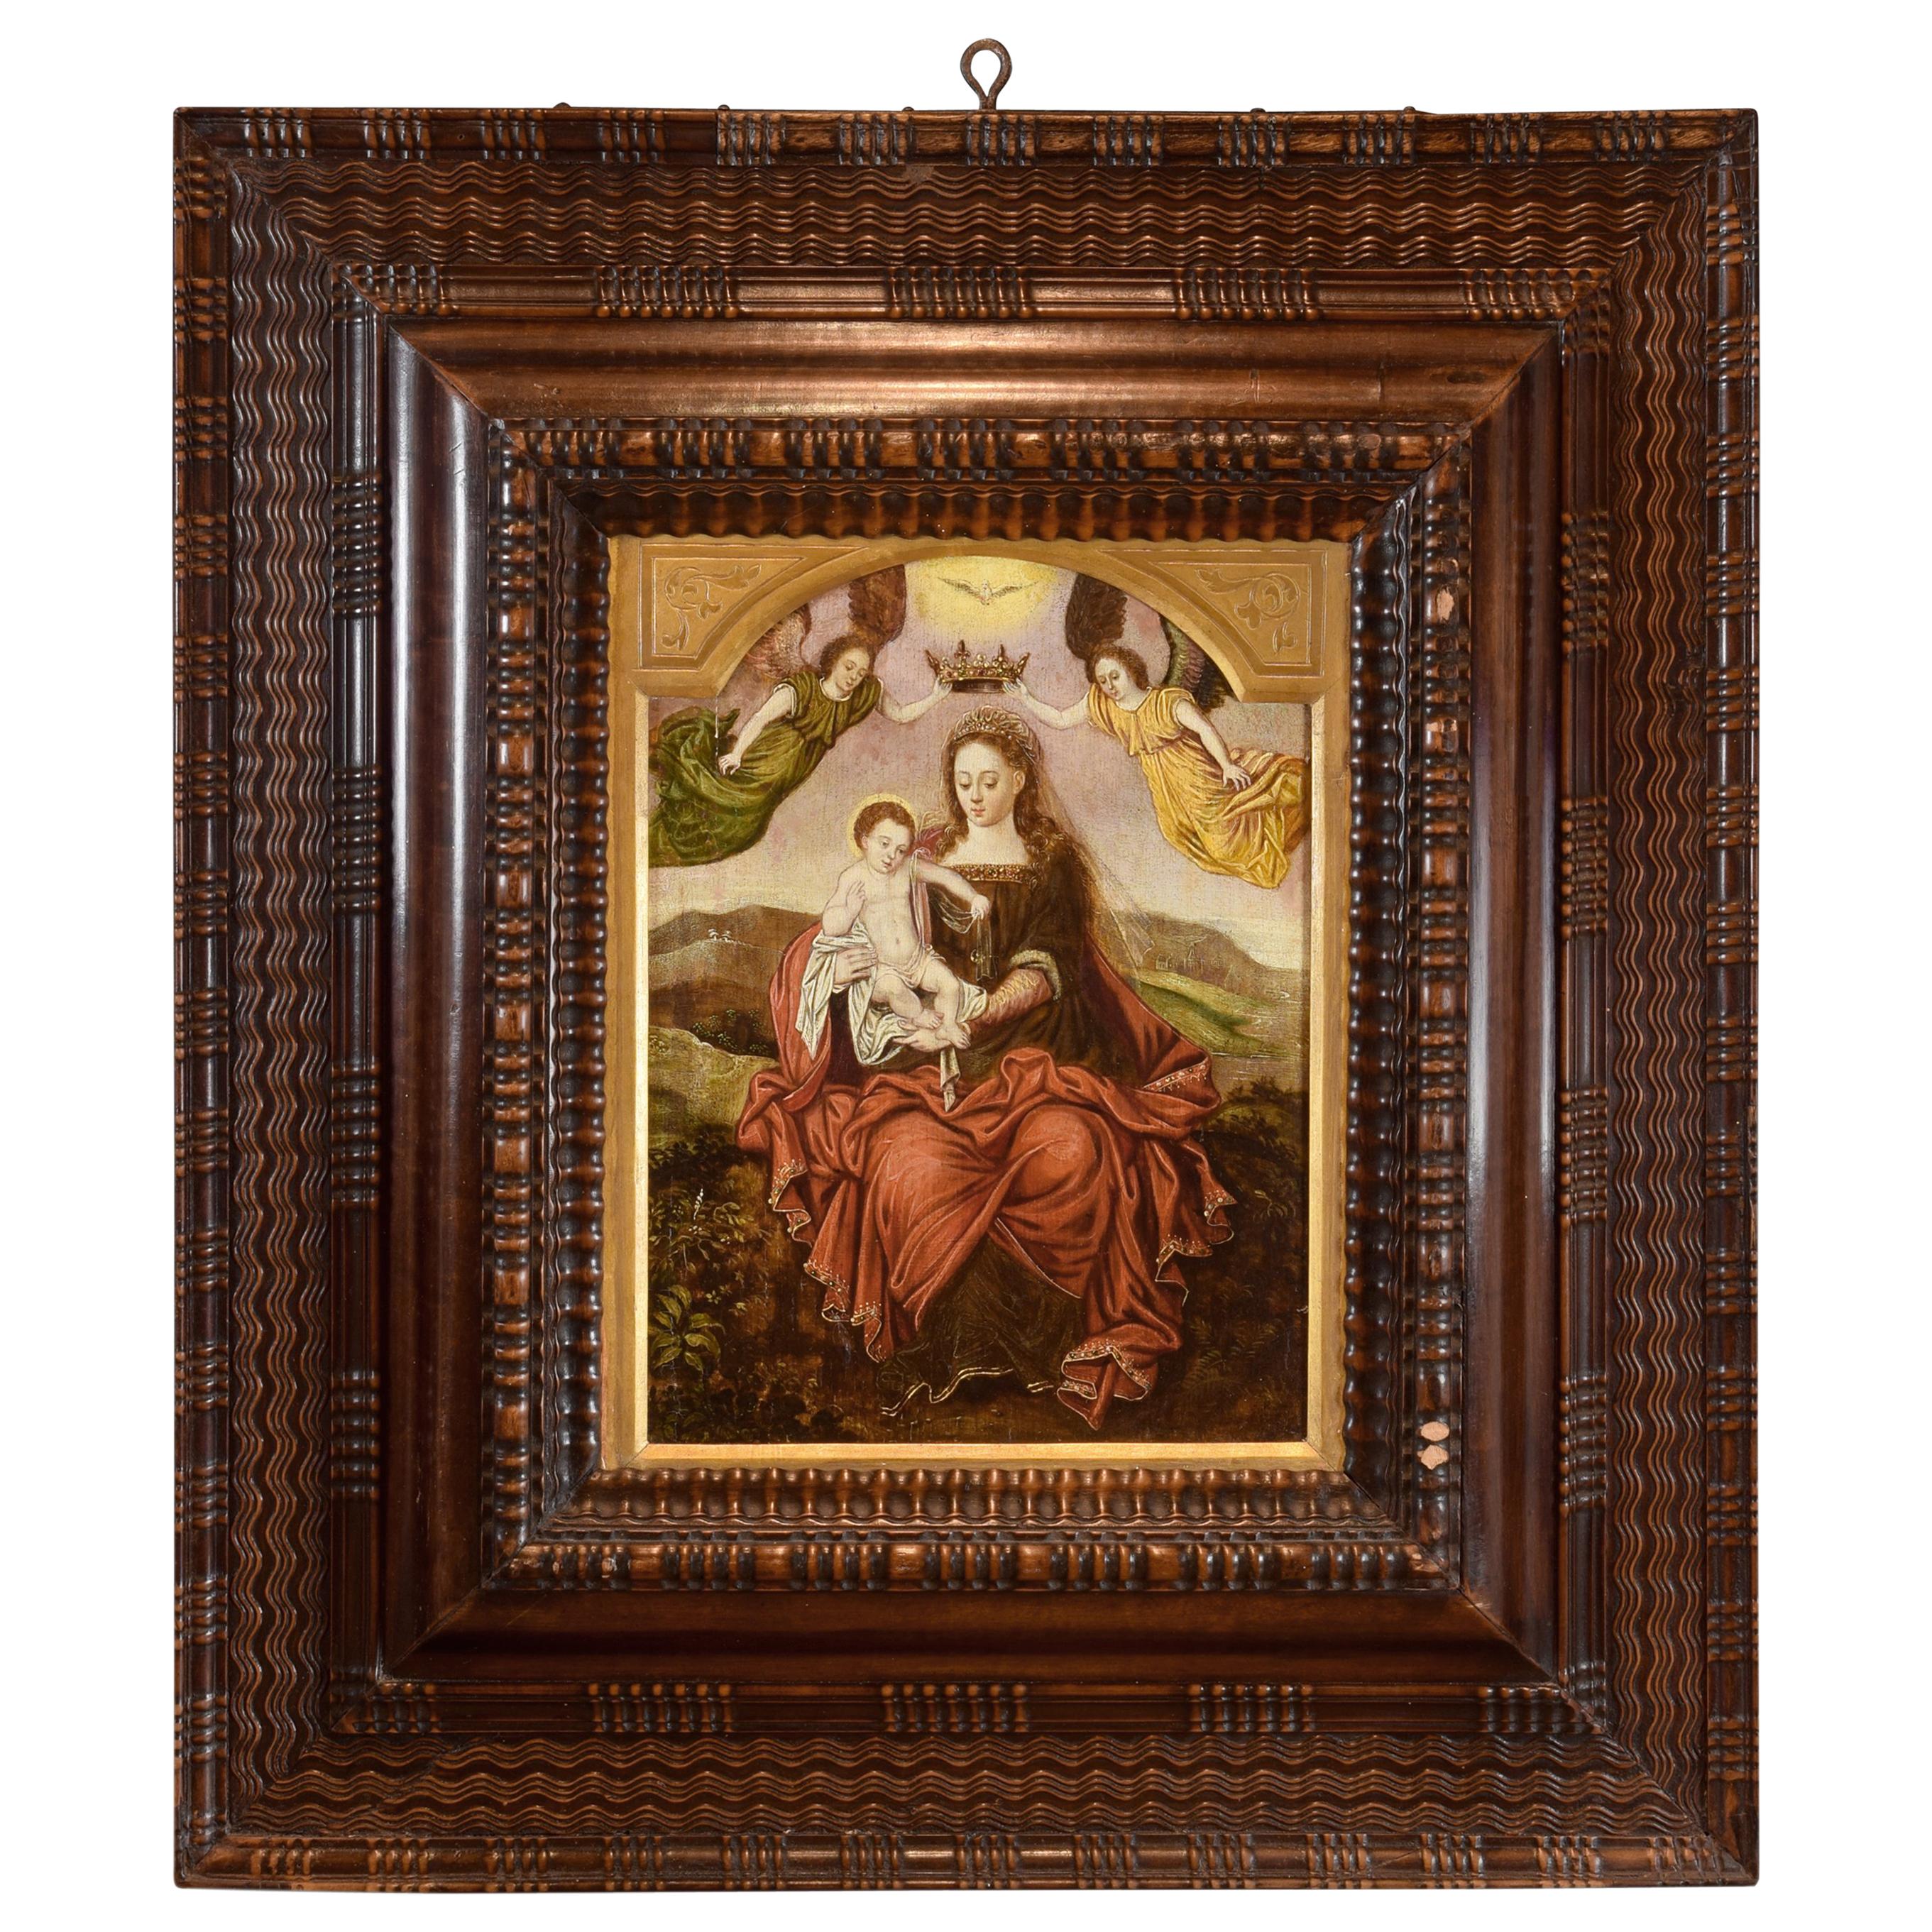 "Virgin with Child", Oil on Panel, Spanish School, 16th Century